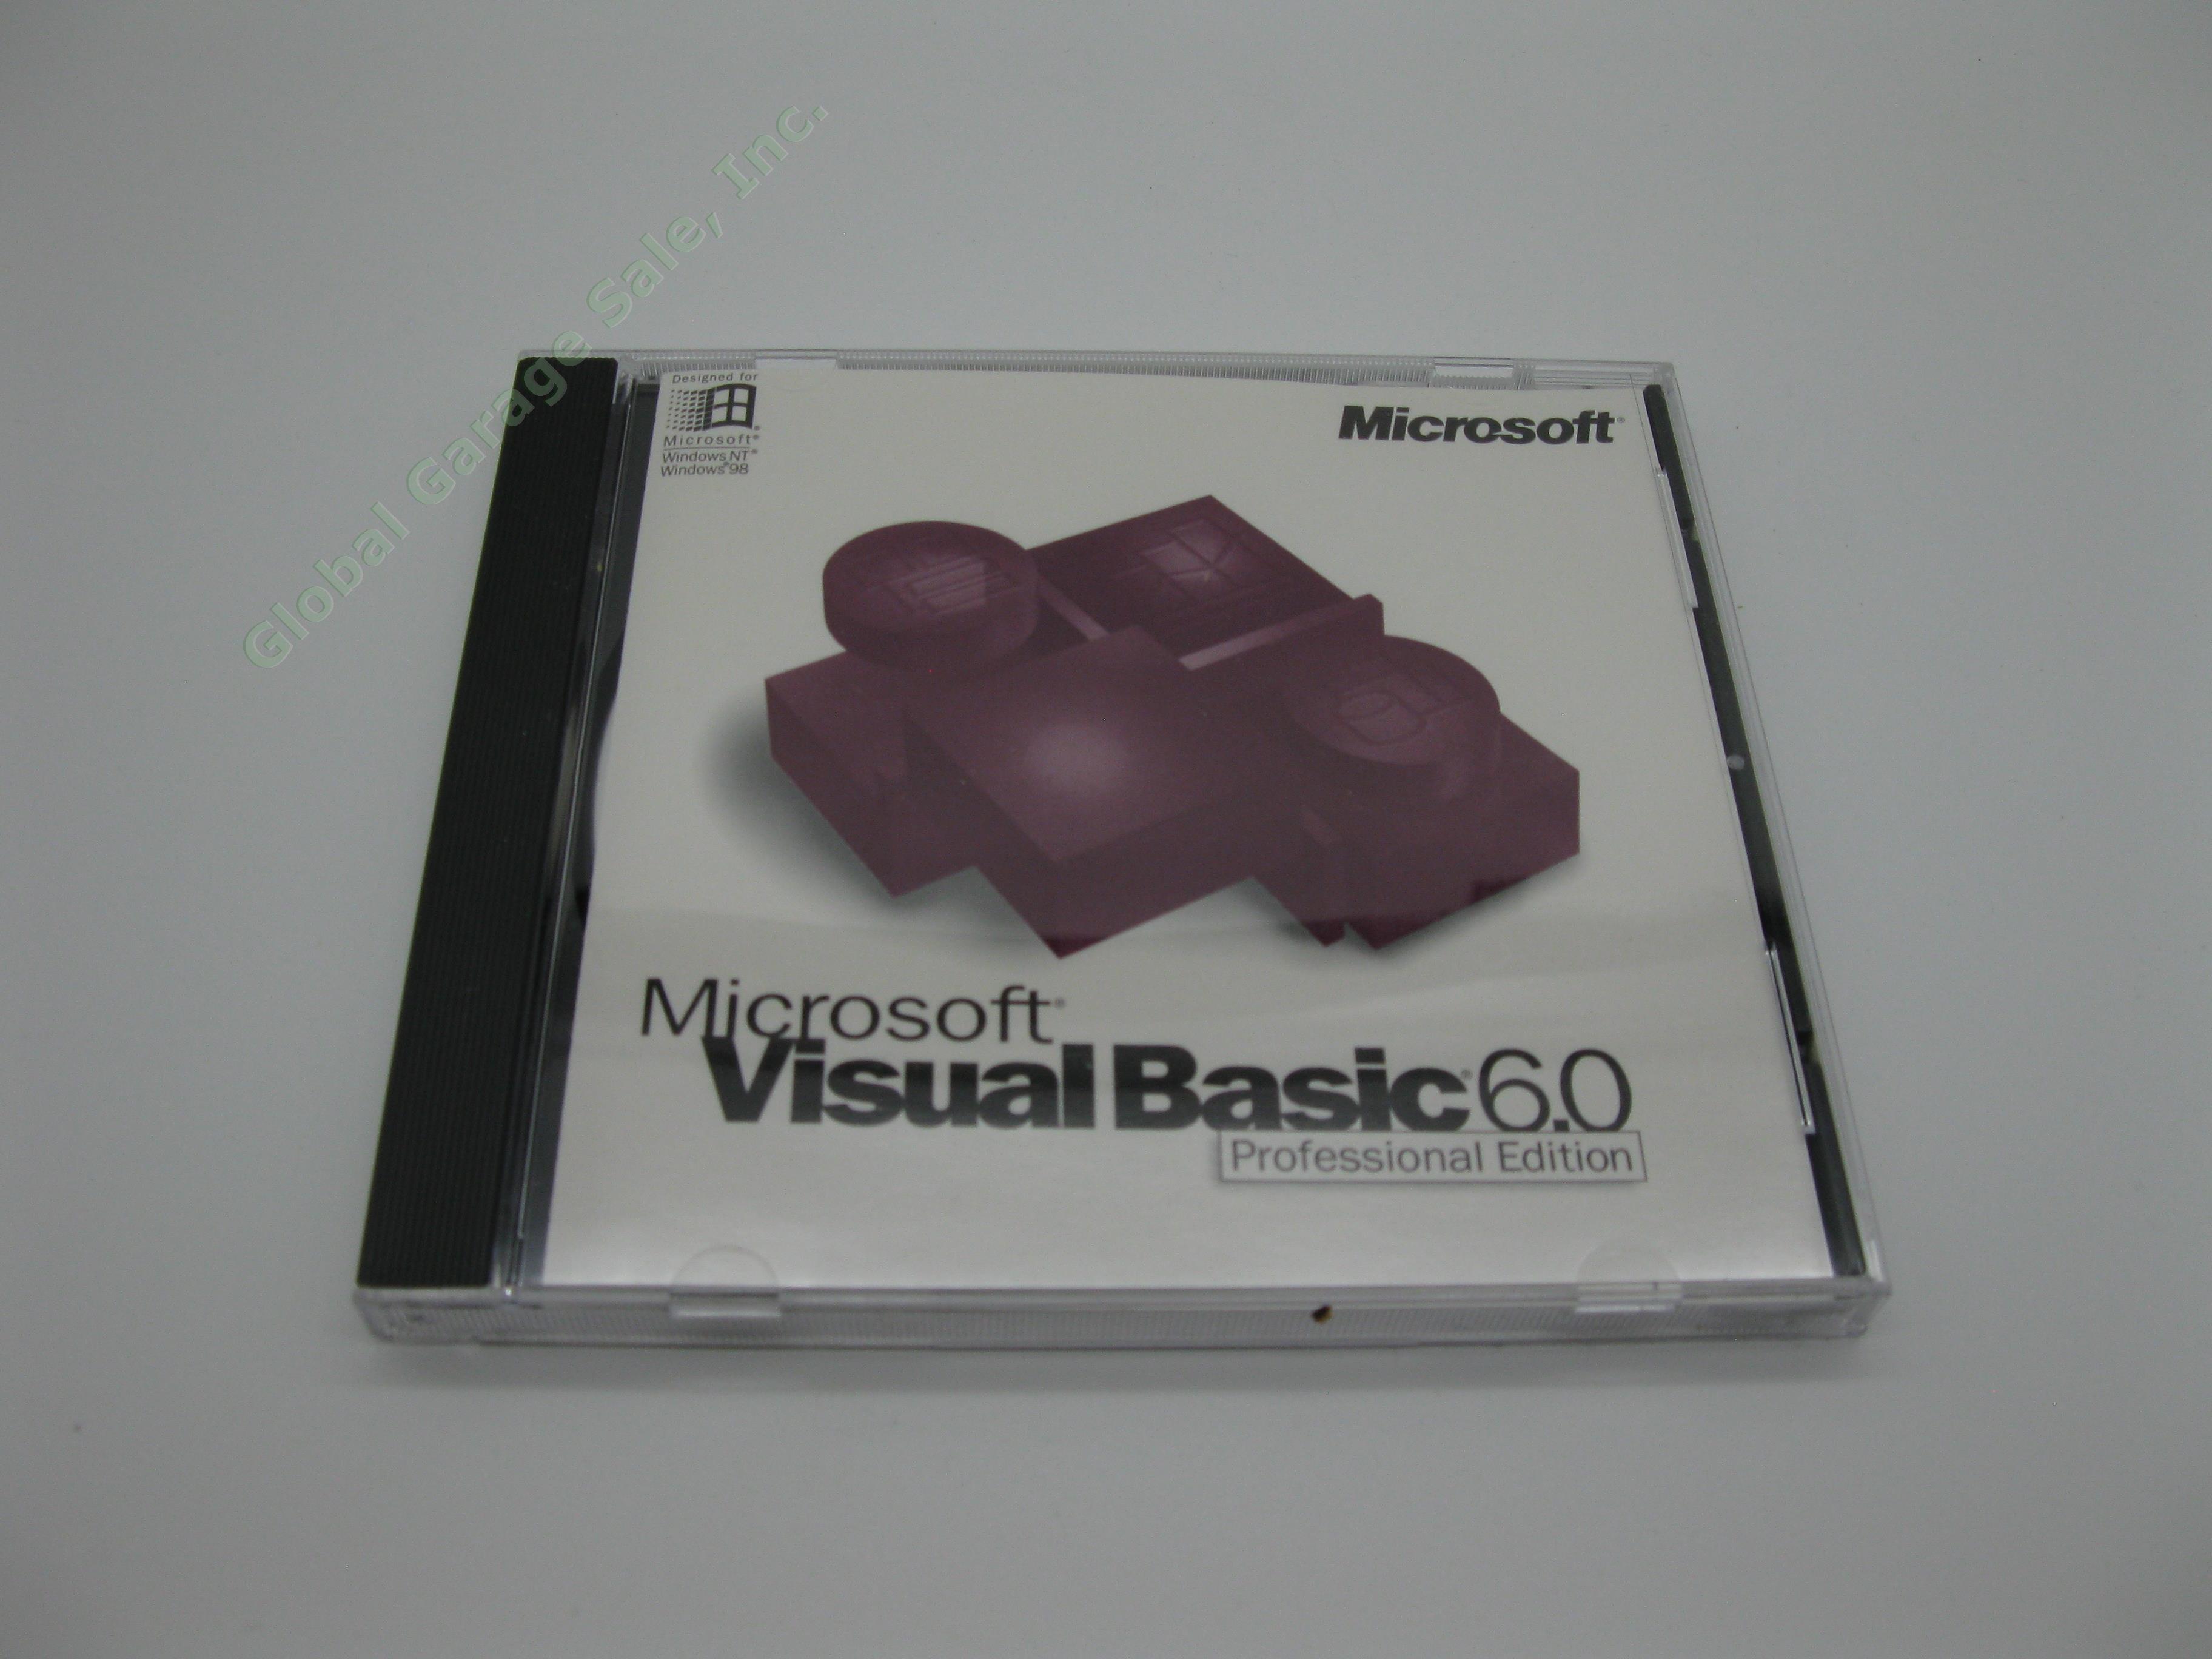 Microsoft Visual Basic 6.0 Professional Edition Pro Full Retail Box Commercial 14